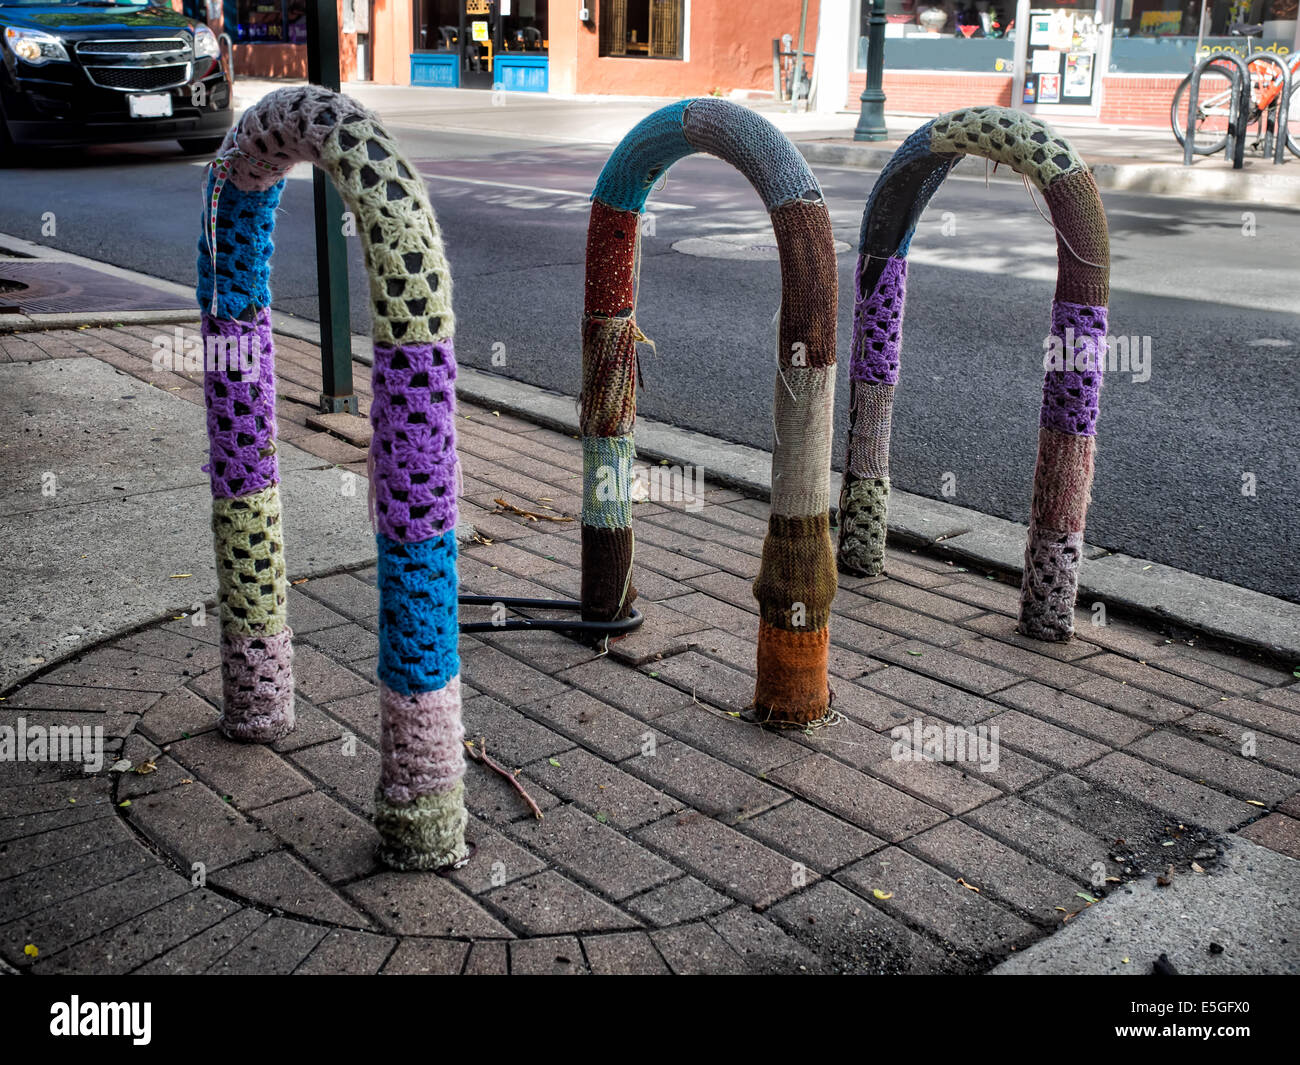 Colorful bike racks with knitwear, Flagstaff, Arizona USA Stock Photo